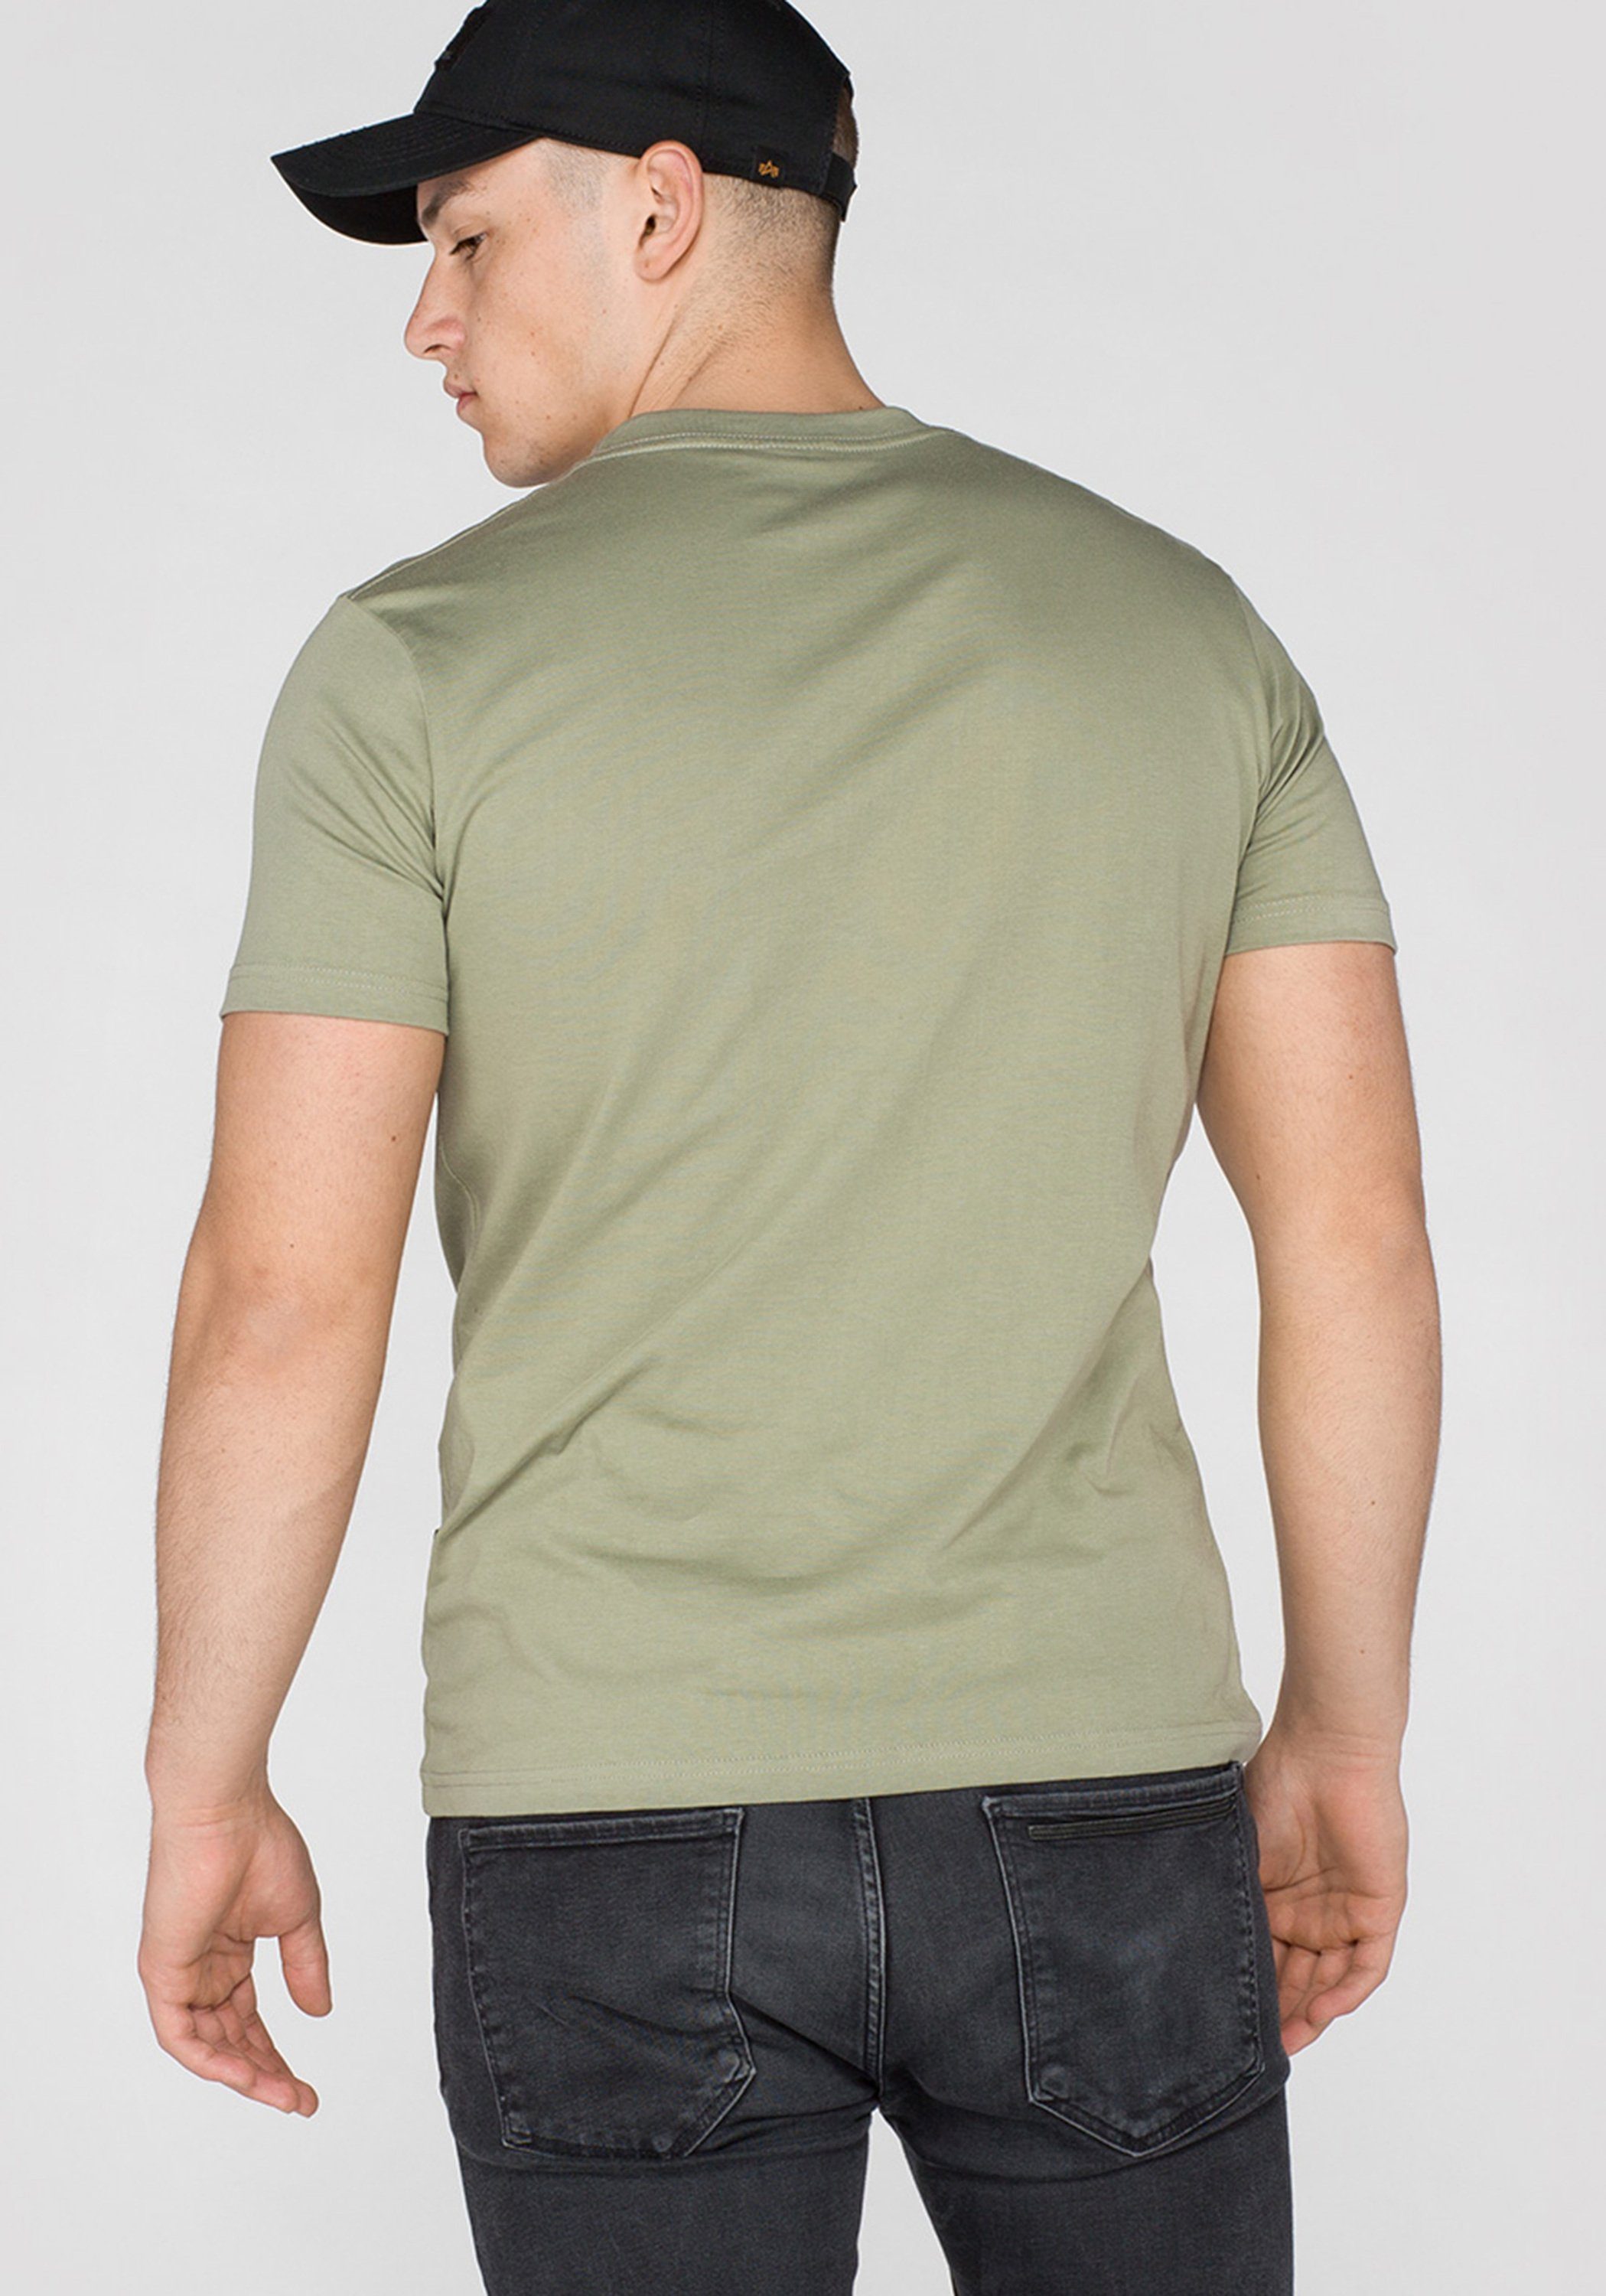 Basic Industries - Industries T-Shirts Alpha T-Shirt olive Alpha T-Shirt Men